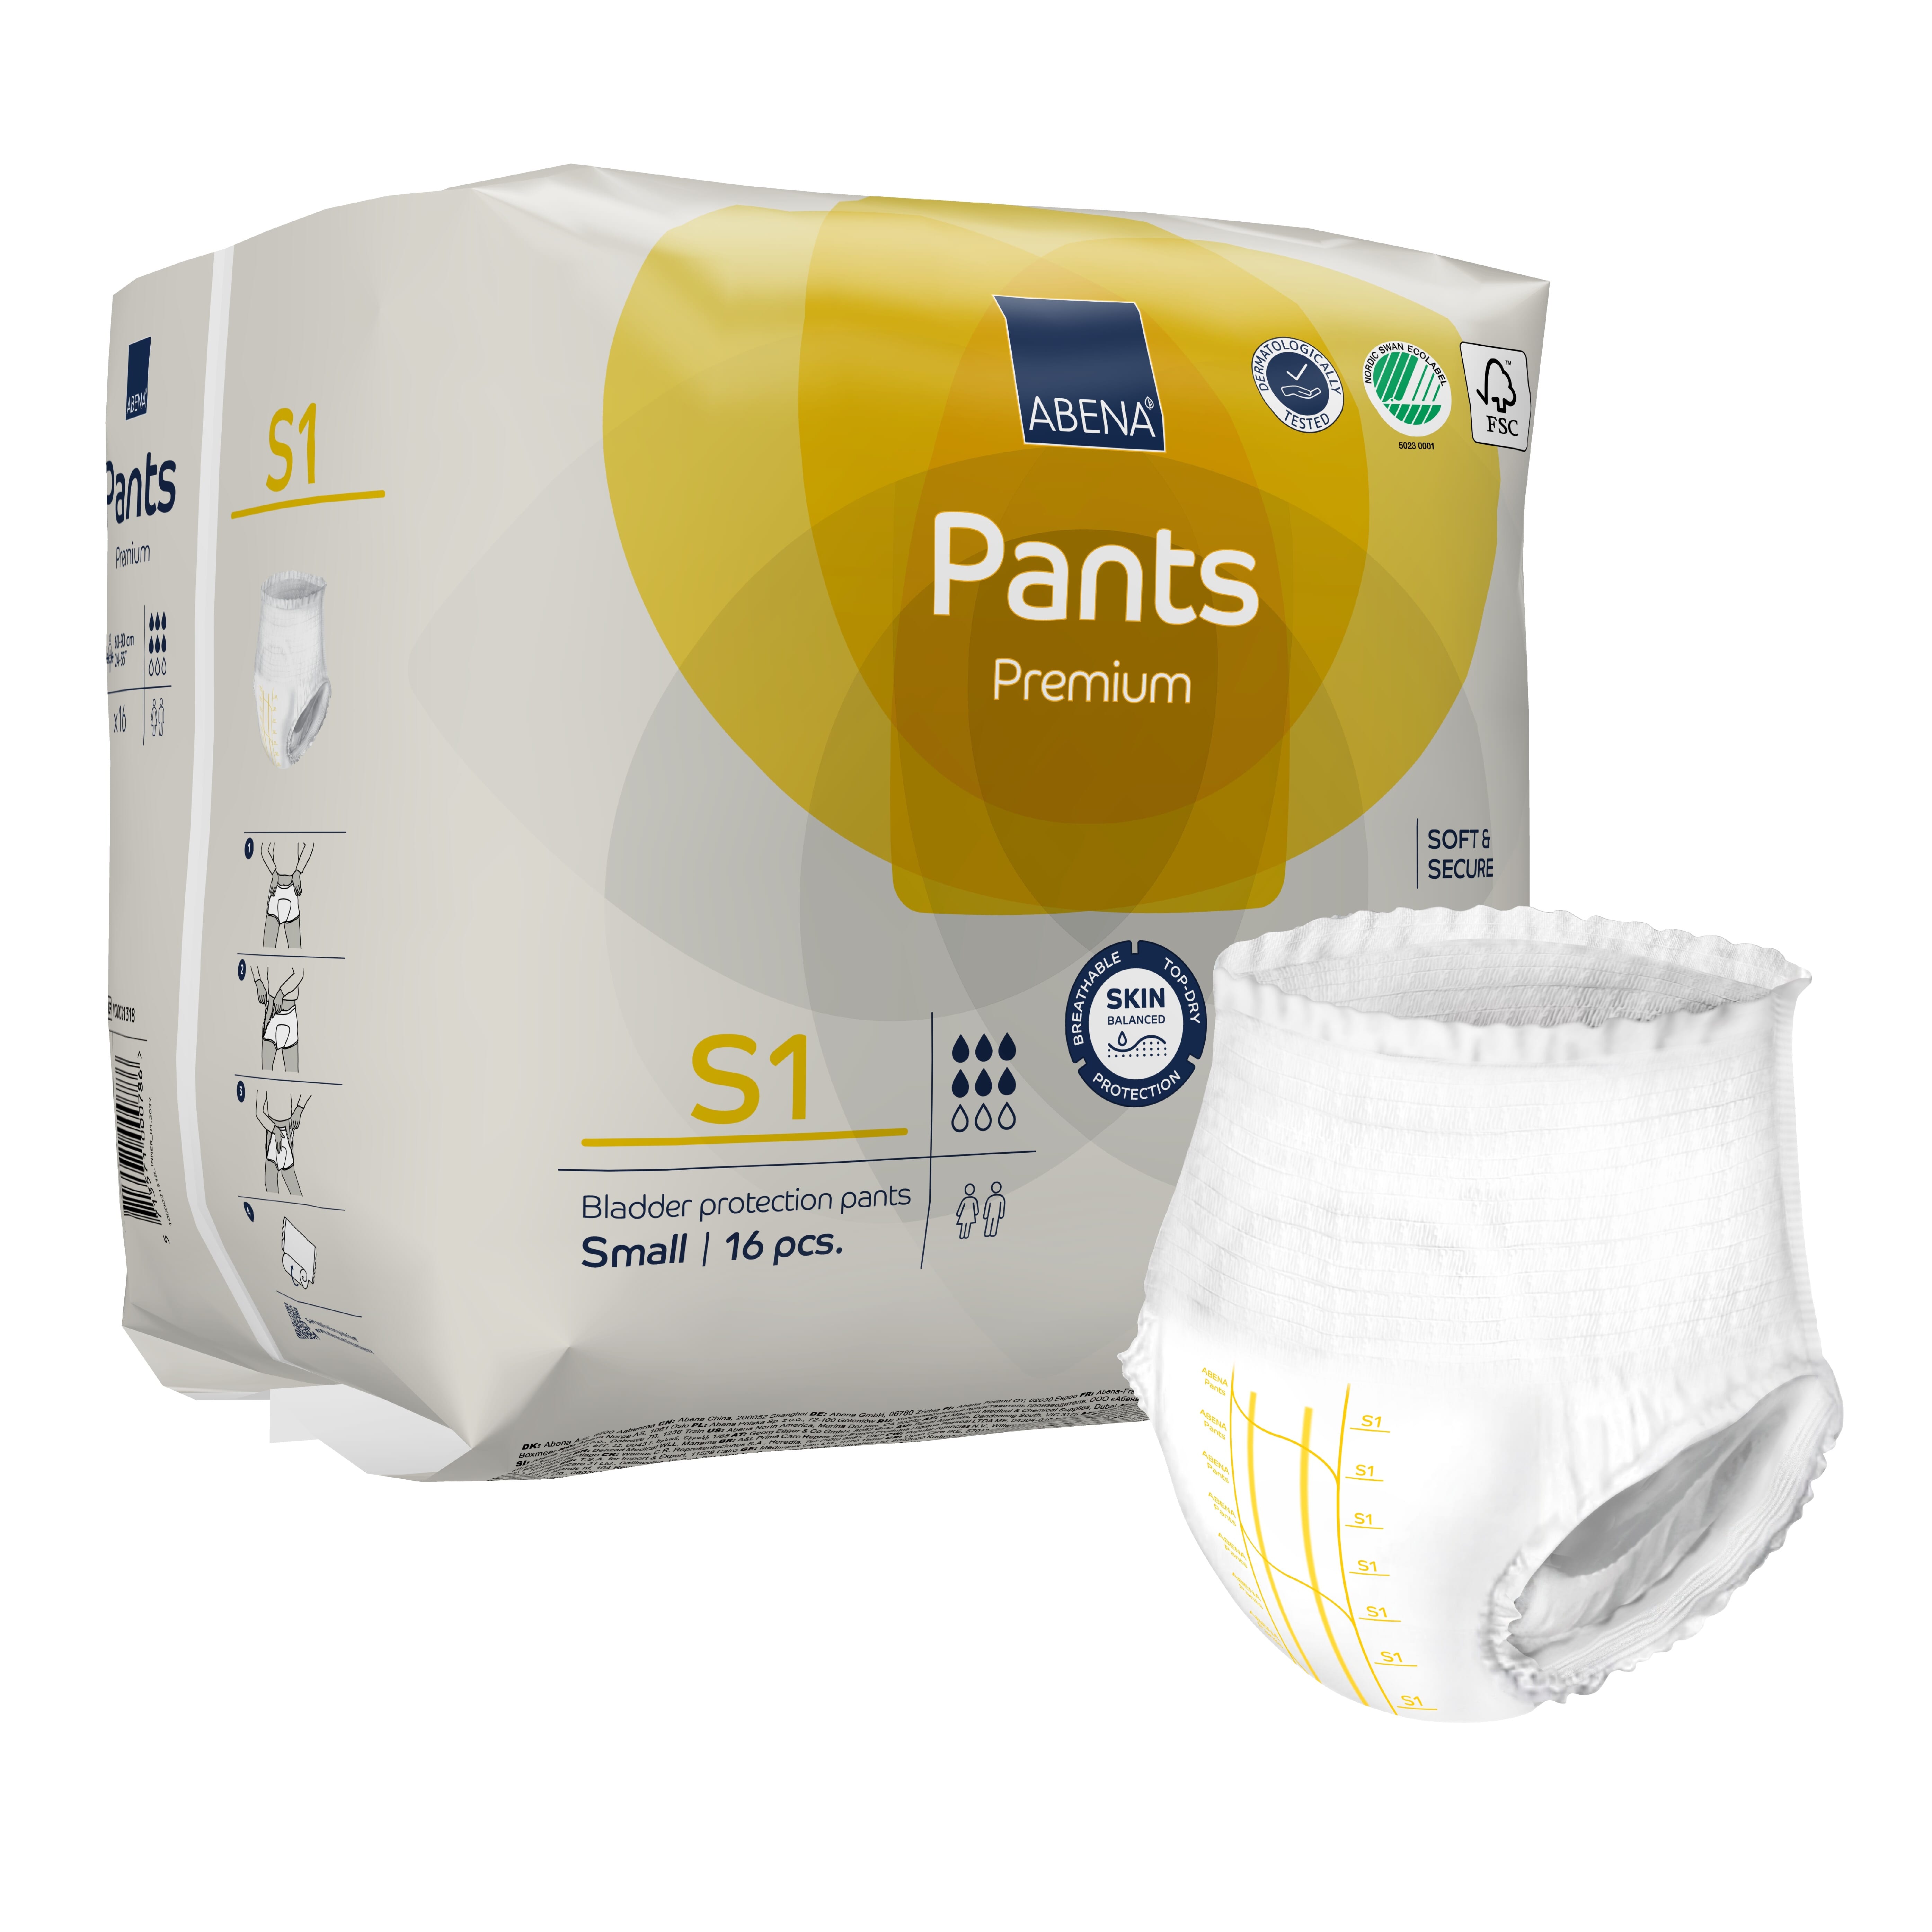 Image of Abena Pants Premium Incontinence Pants - S1